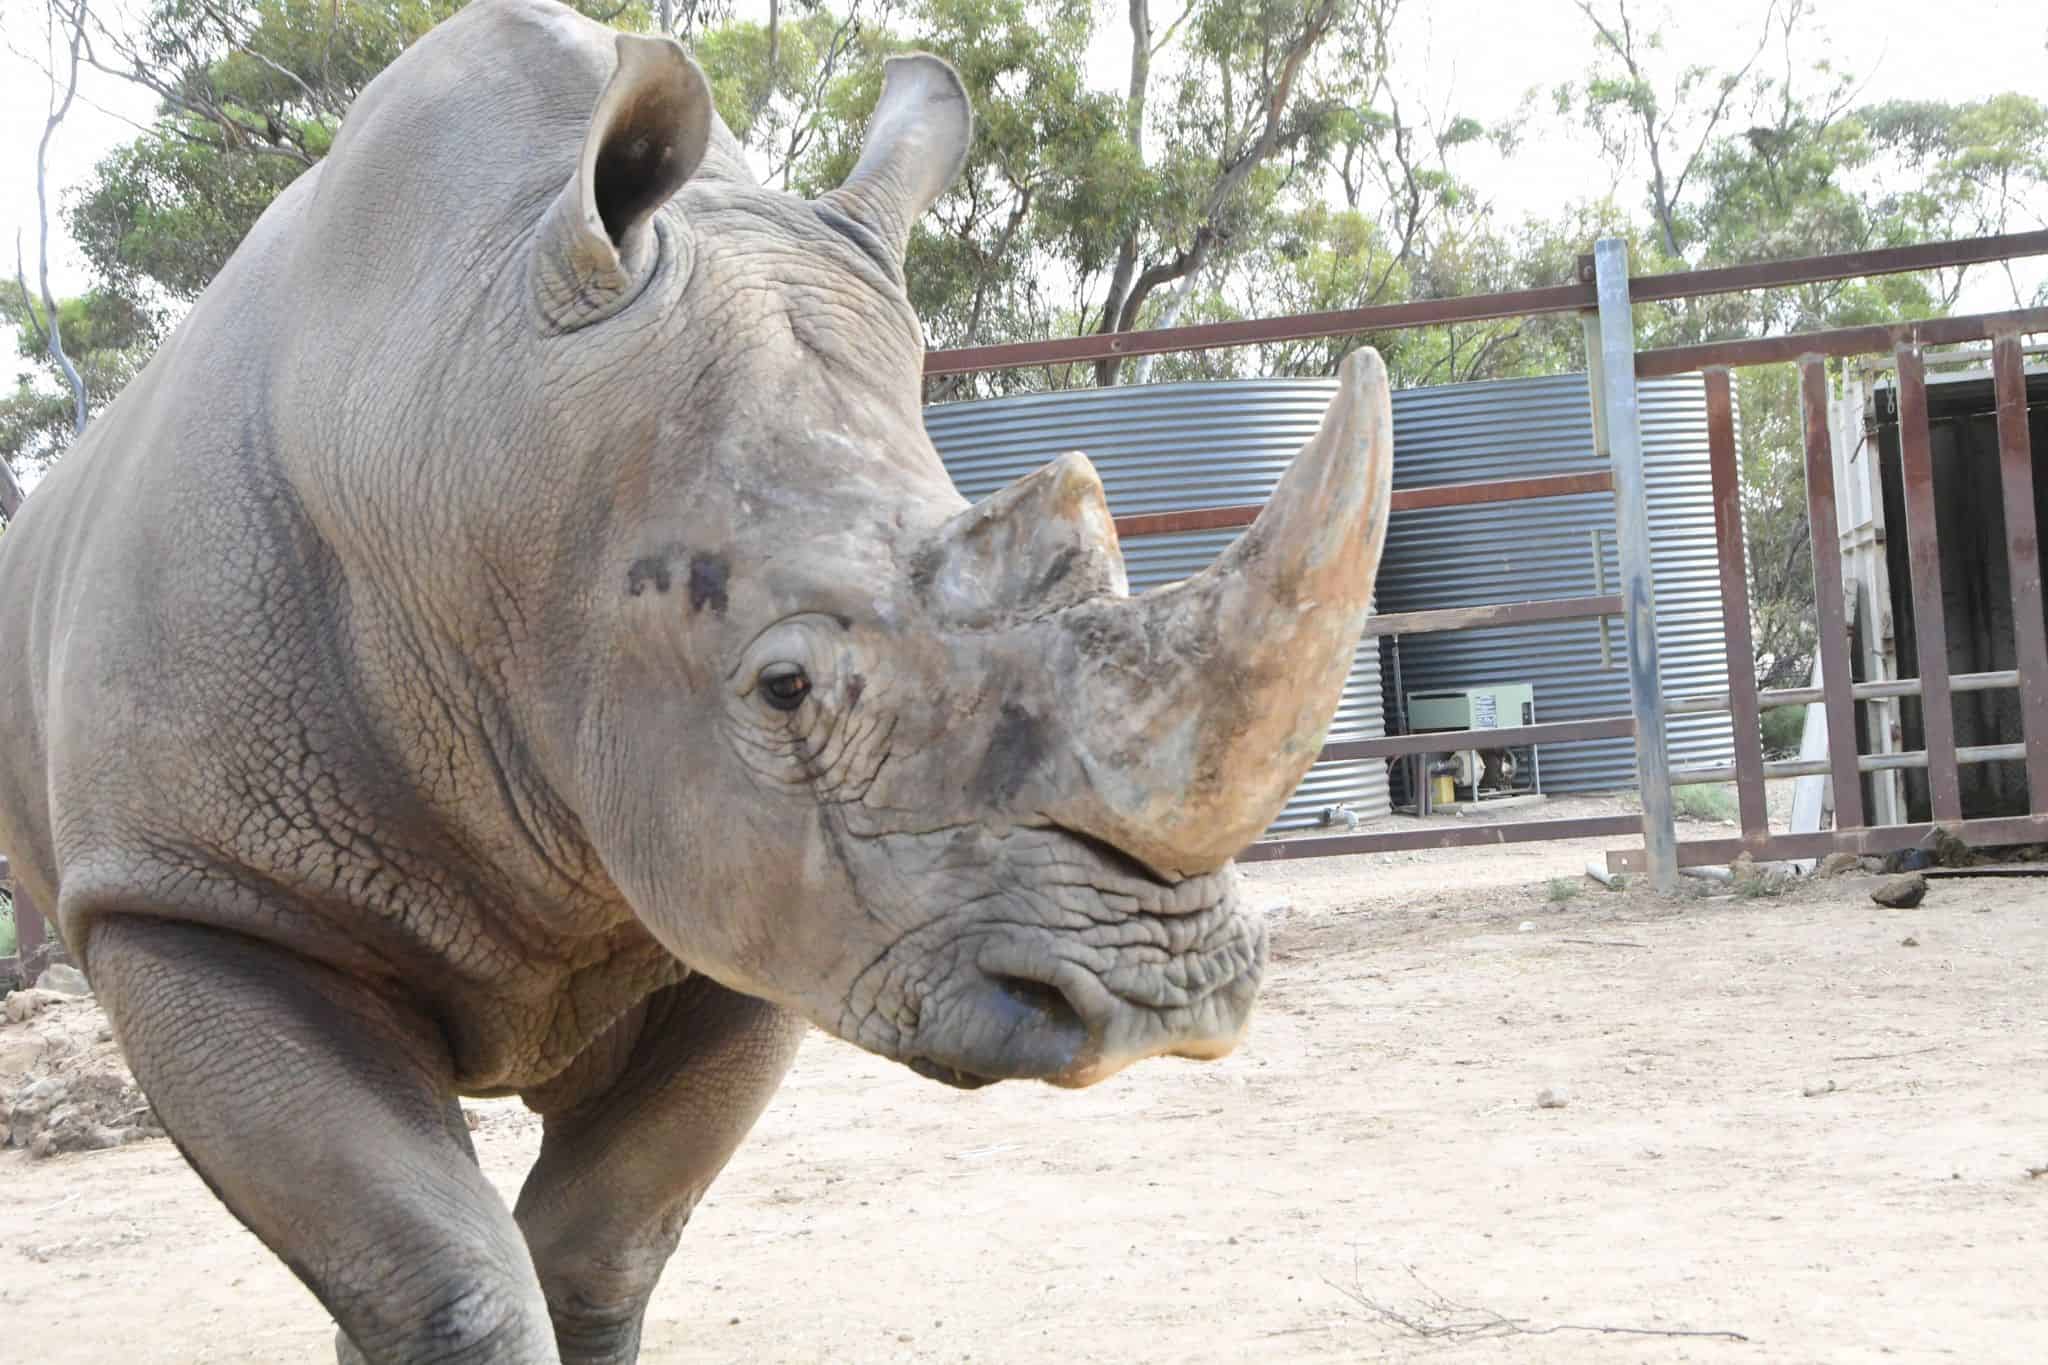 A rhinormous swap to help species survival